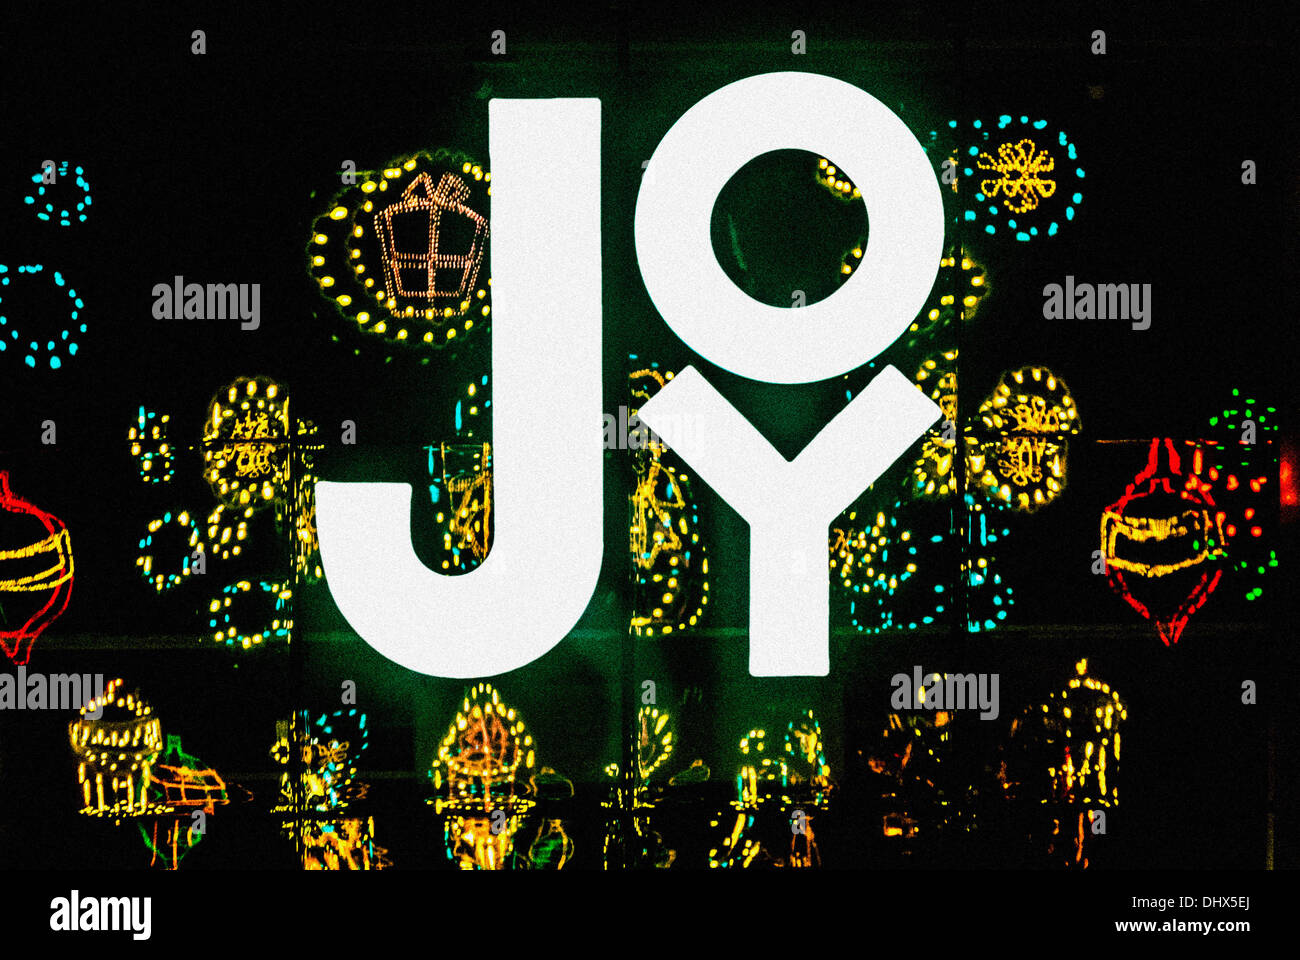 JOY shop sign with reflections of Christmas illuminated decorations Stock Photo